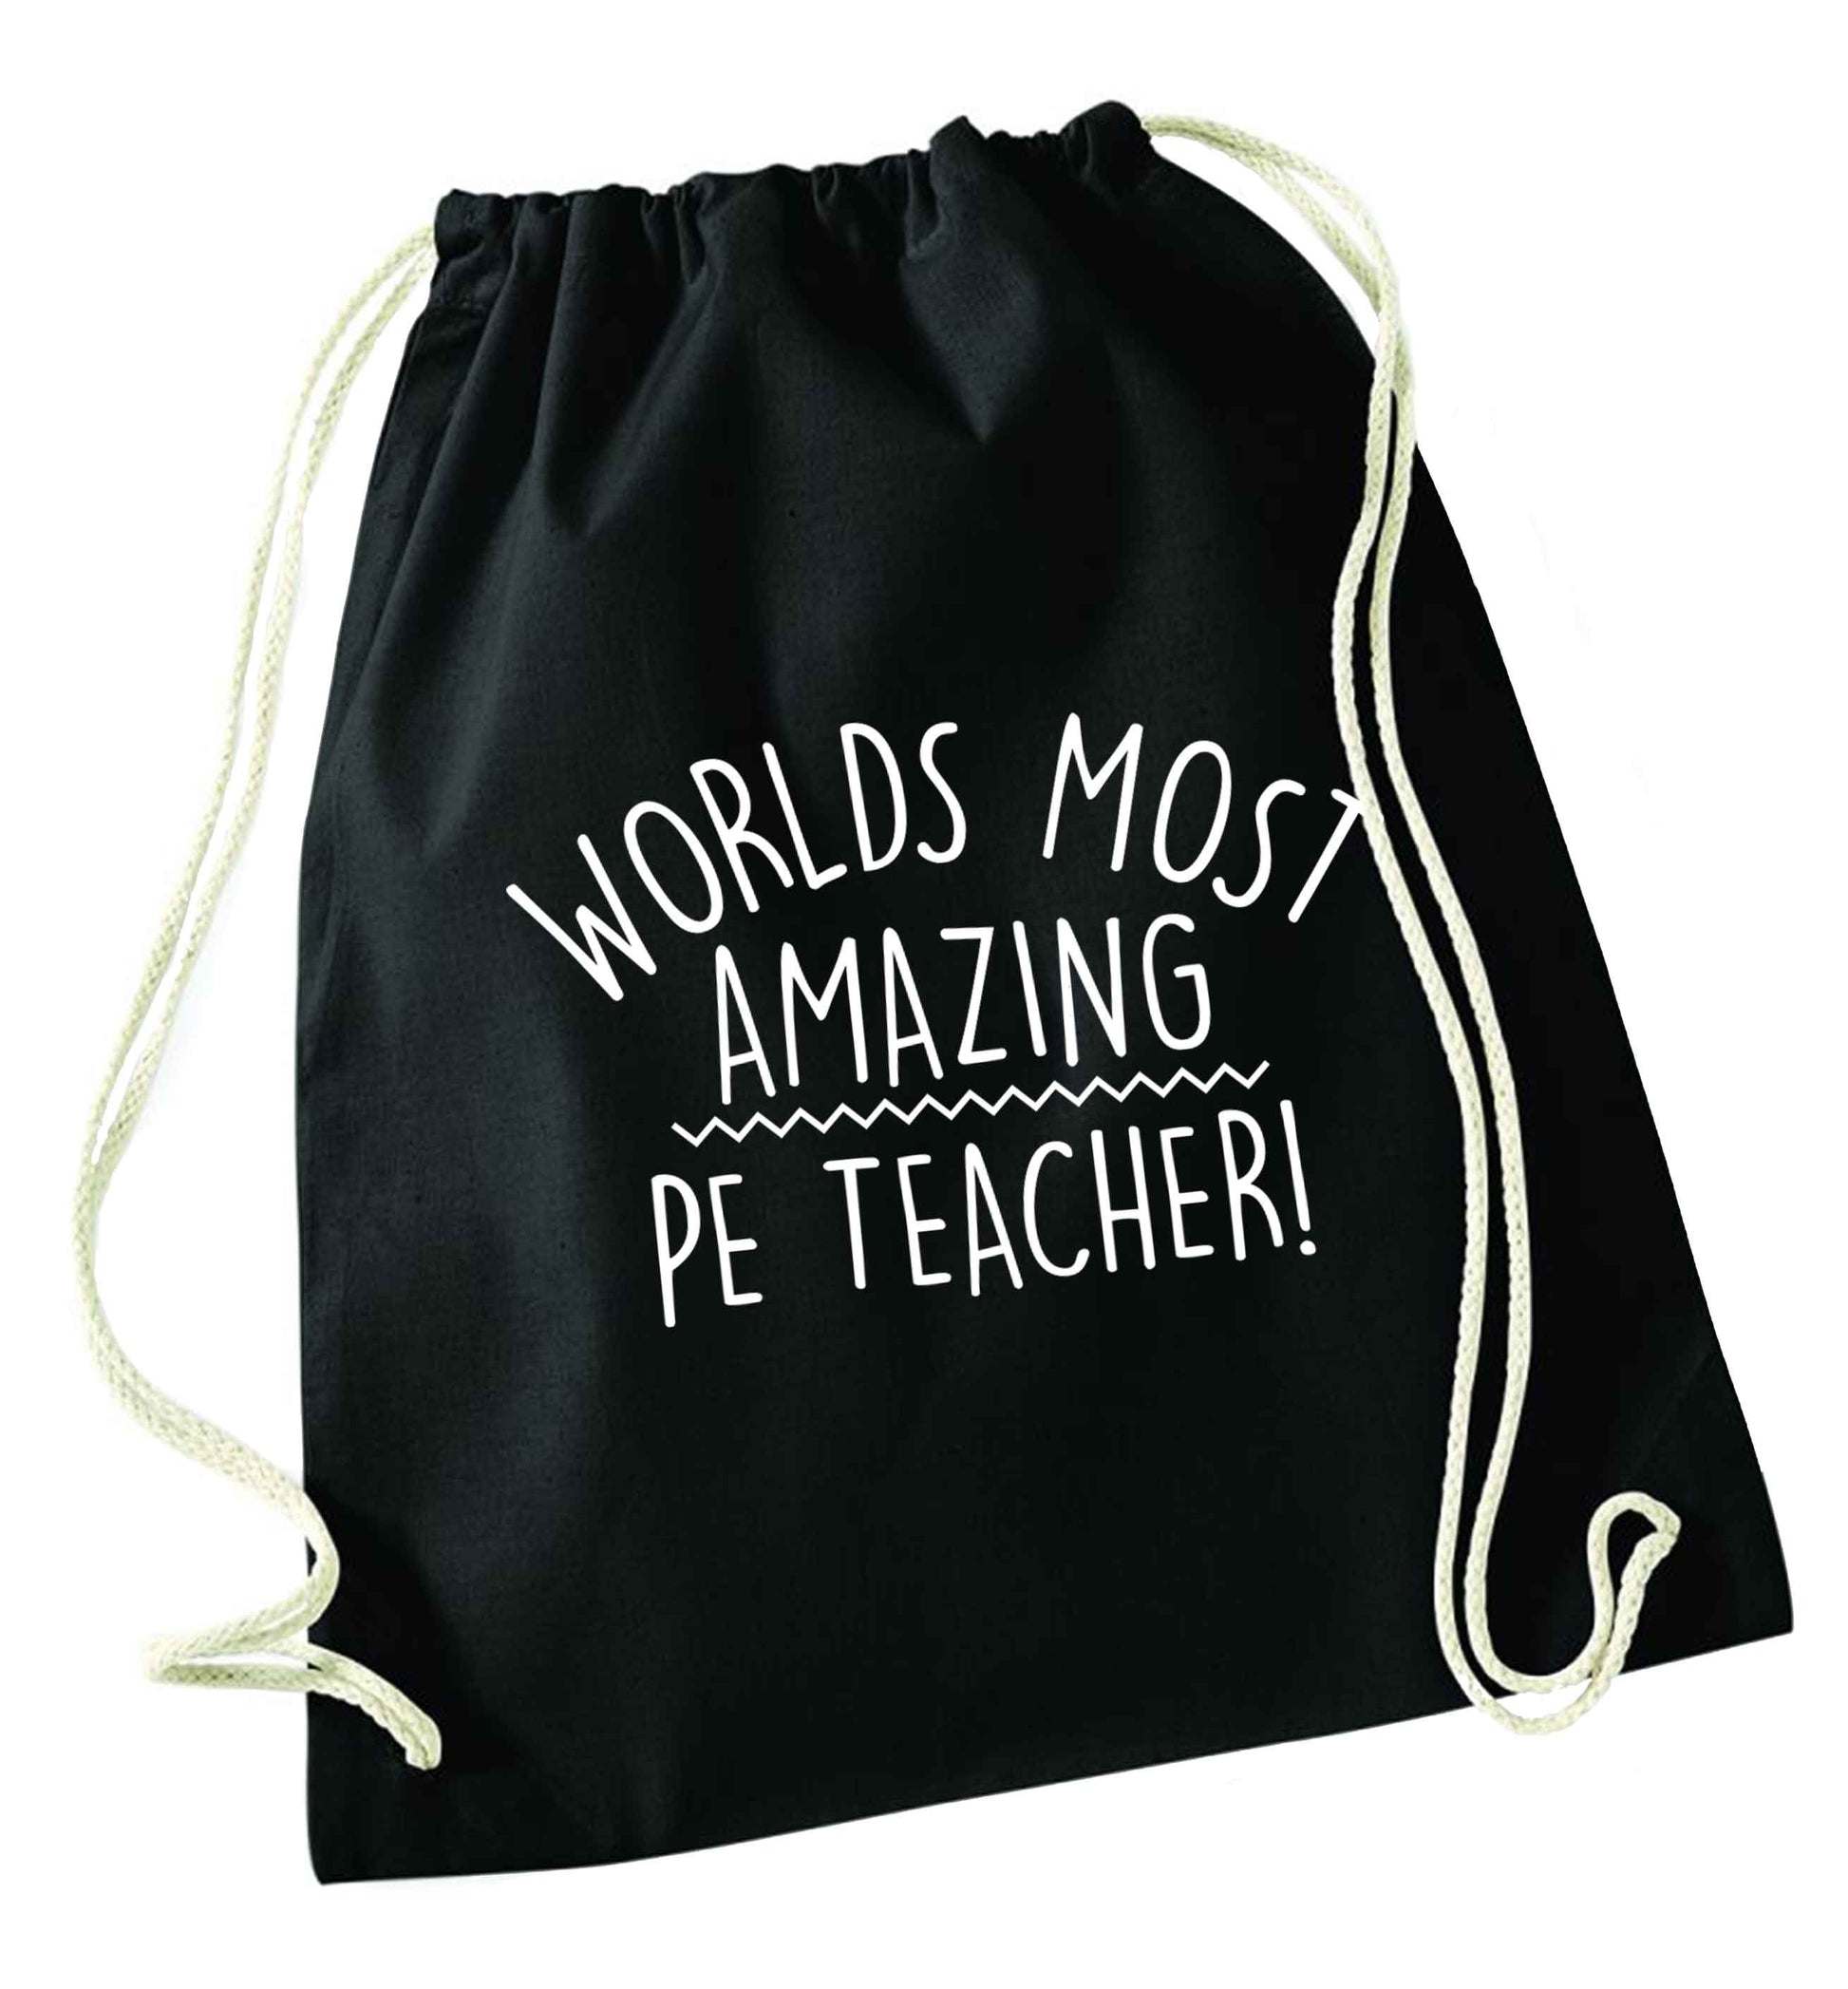 Worlds most amazing PE teacher black drawstring bag